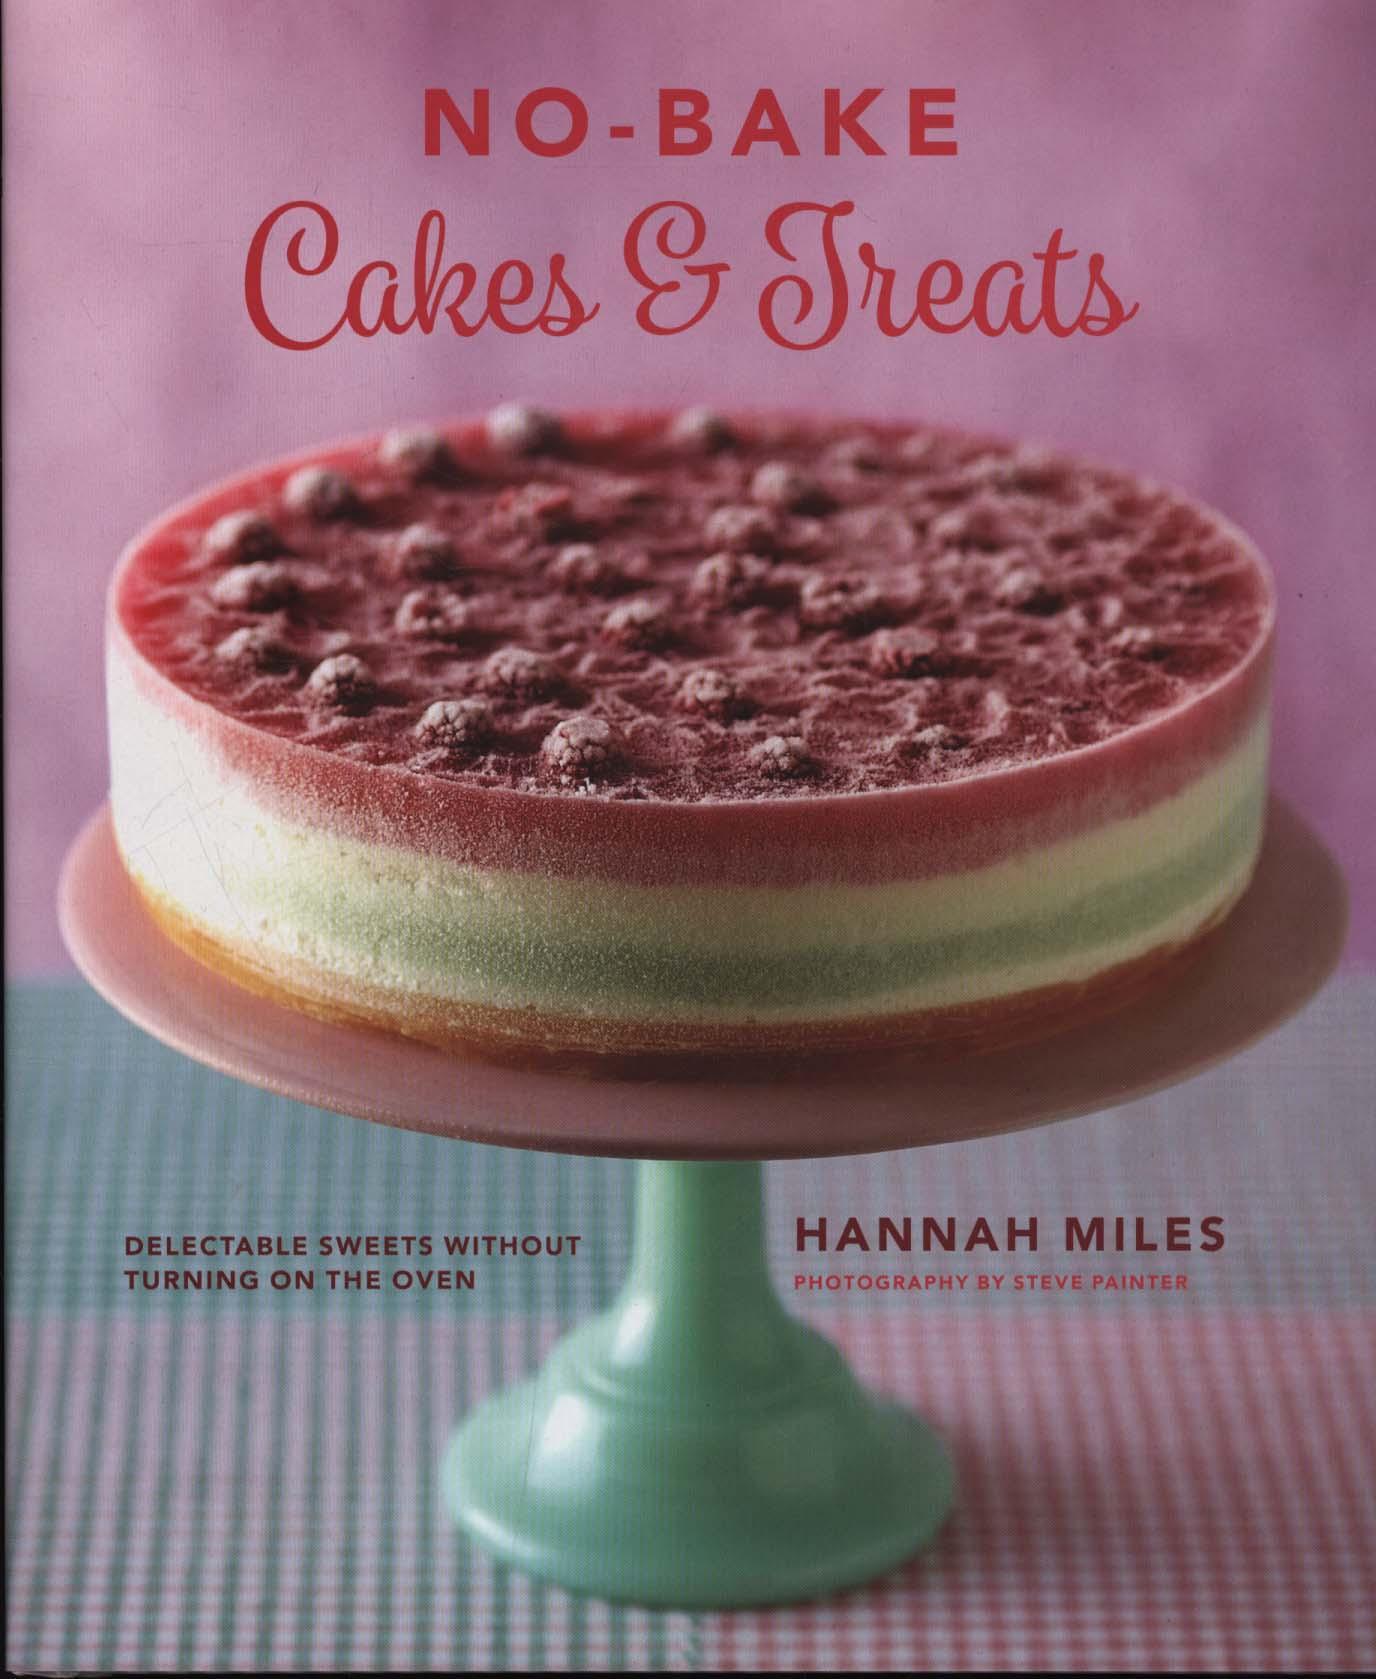 No-bake! Cakes & Treats Cookbook - Hannah Miles